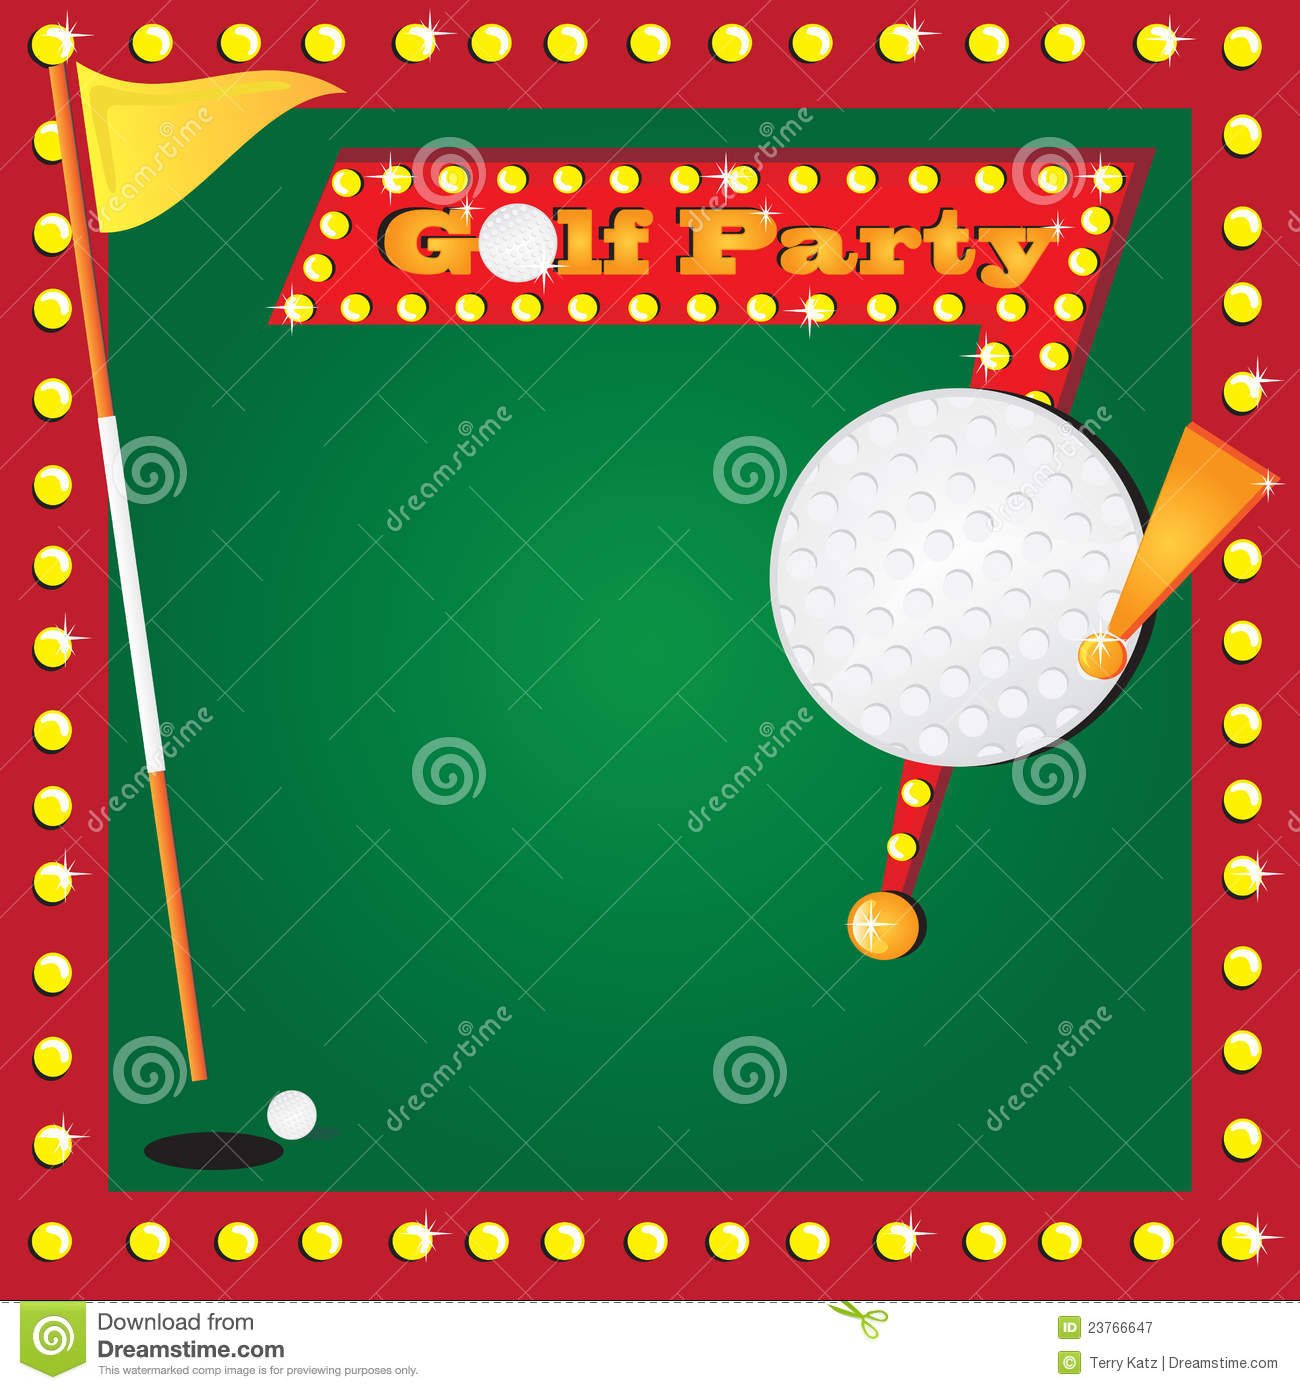 Retro Miniature Golf Party Invitation Royalty Free Stock